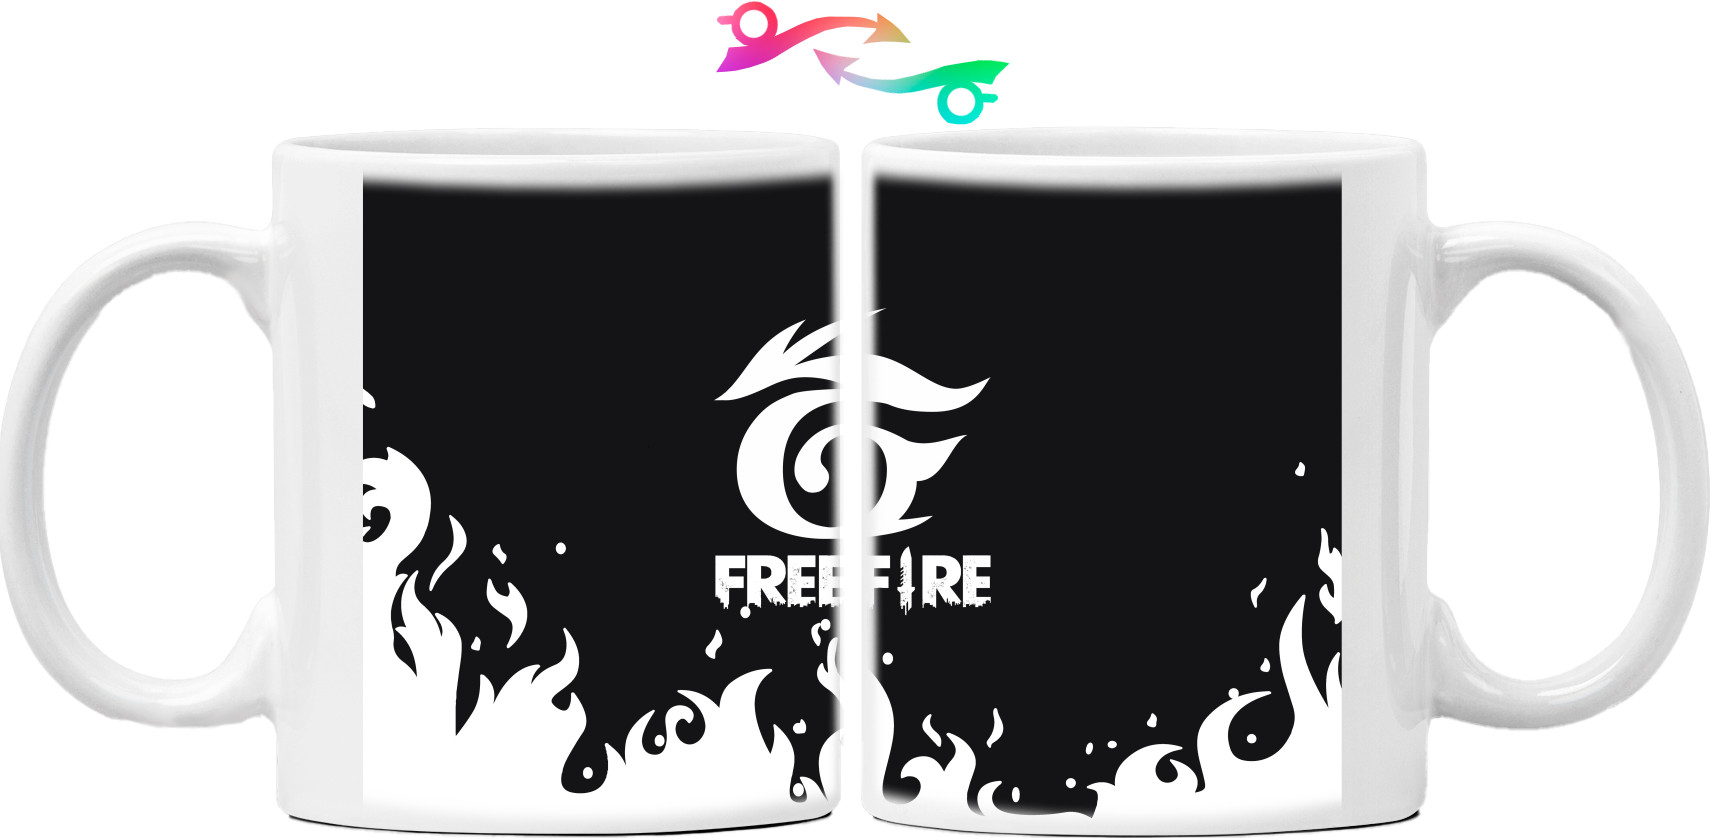 Garena Free Fire [1]